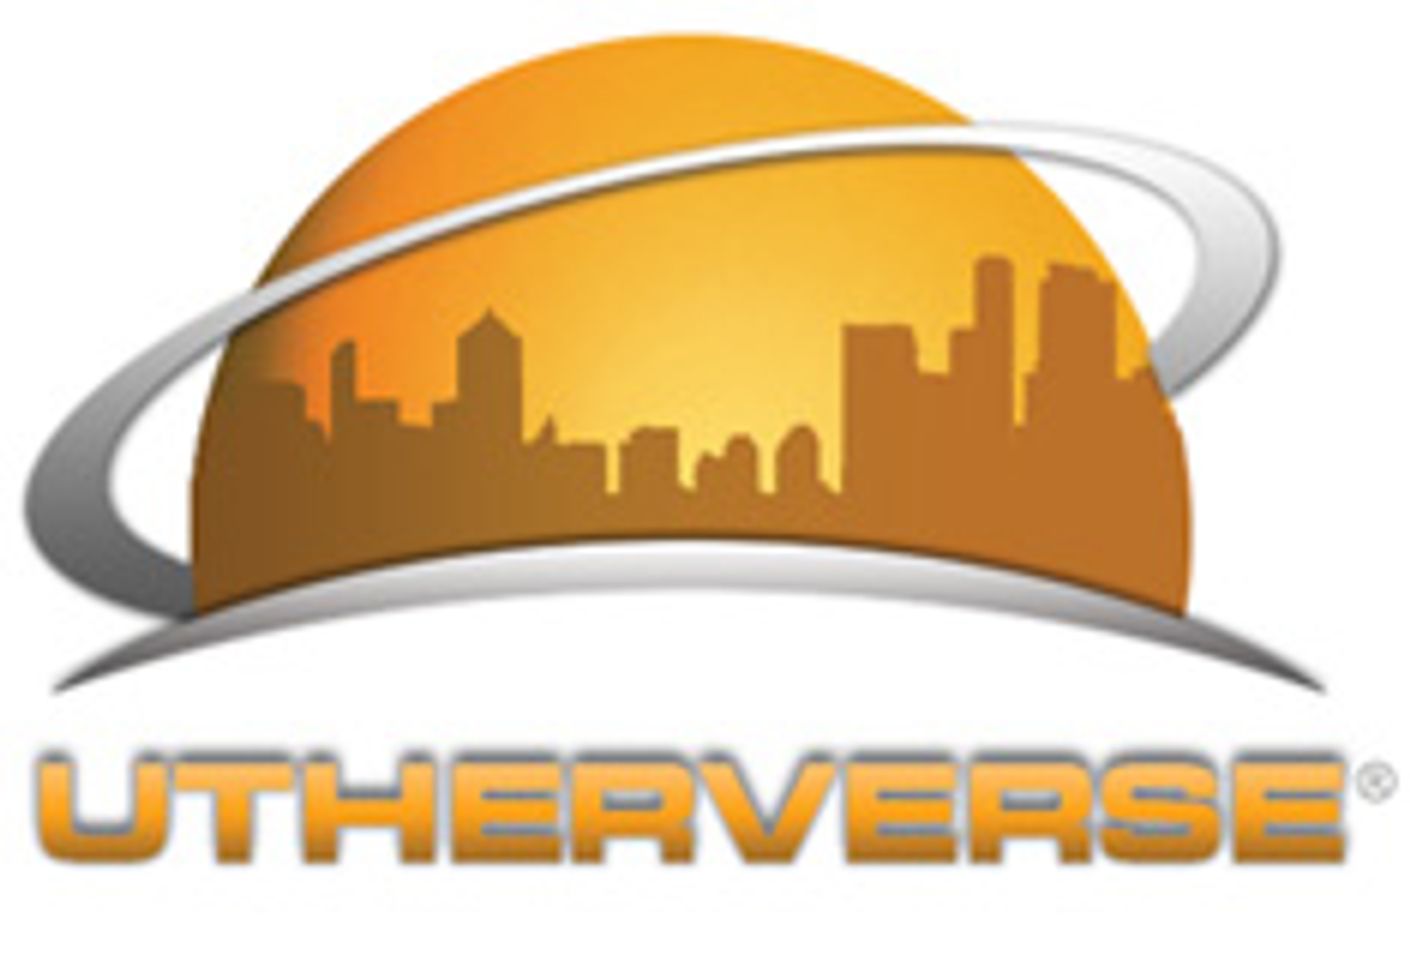 Utherverse, RedLightCenter Launch Innovative 75/75 Affiliate Program